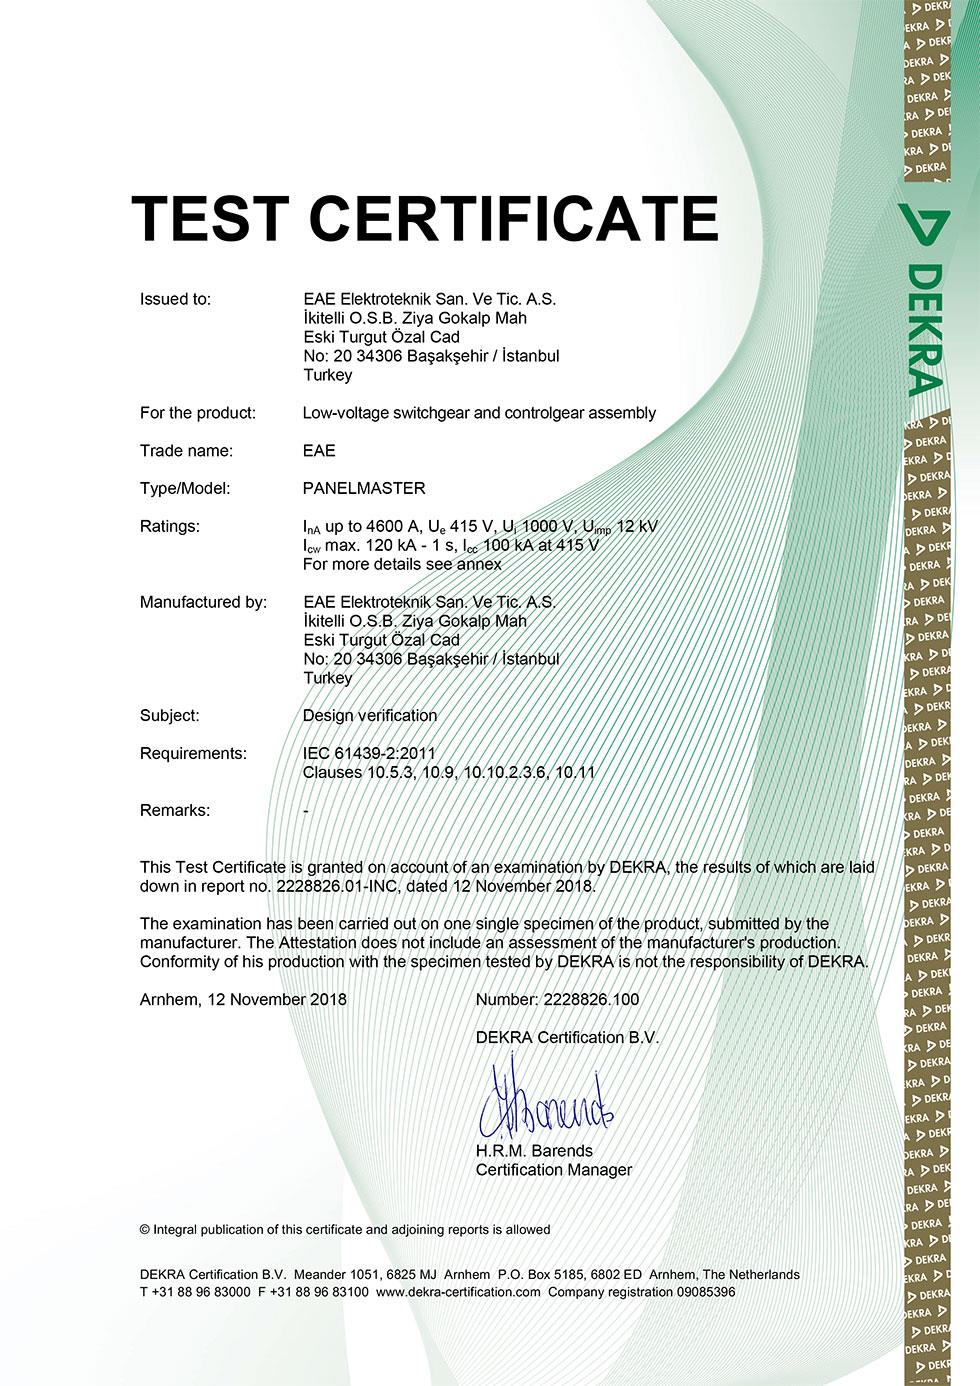 PanelMaster IEC 61439 Type Test Certificate (Mitsubishi - ACB)